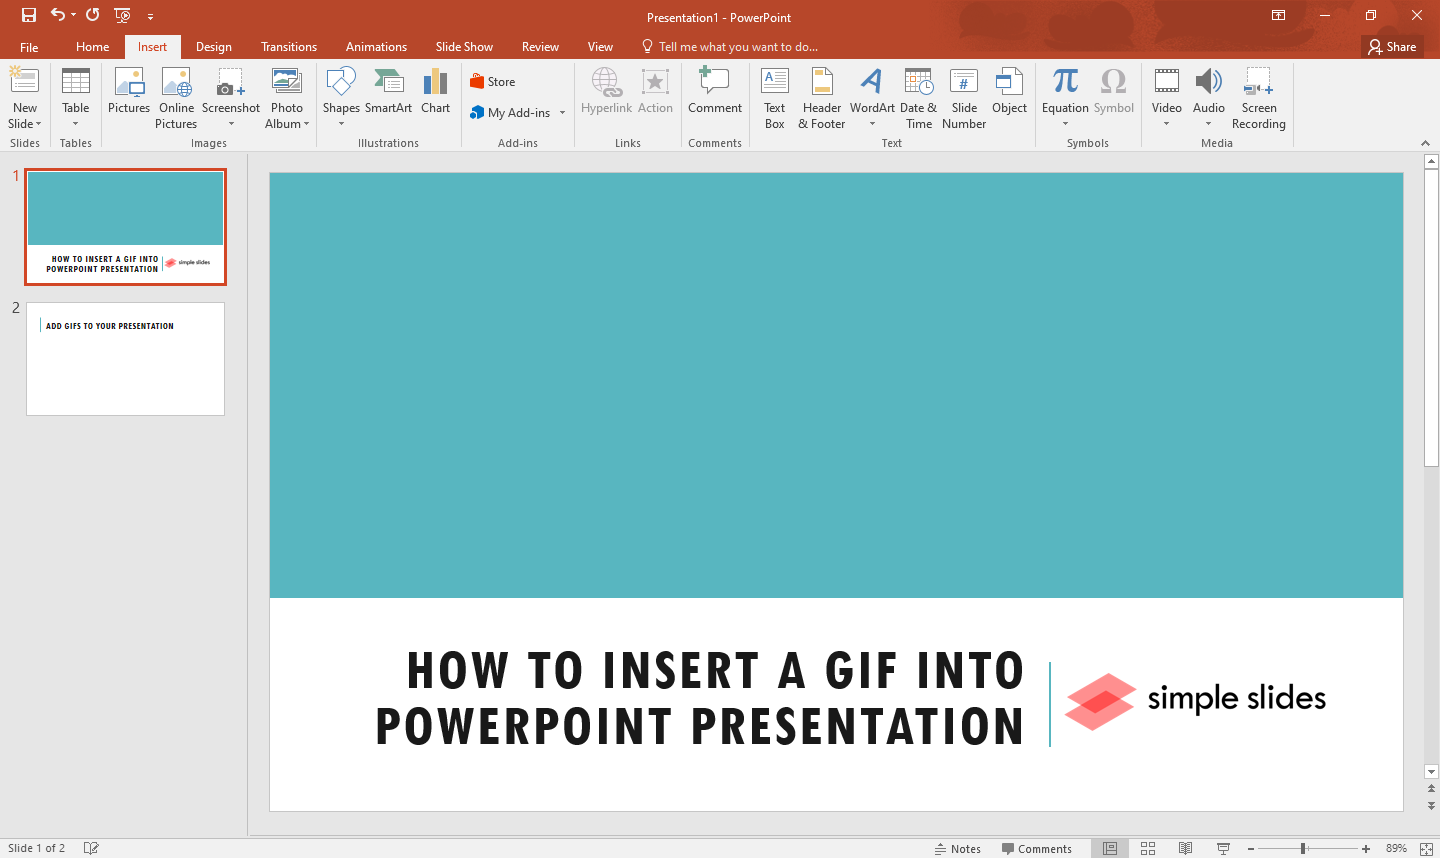 Open PowerPoint